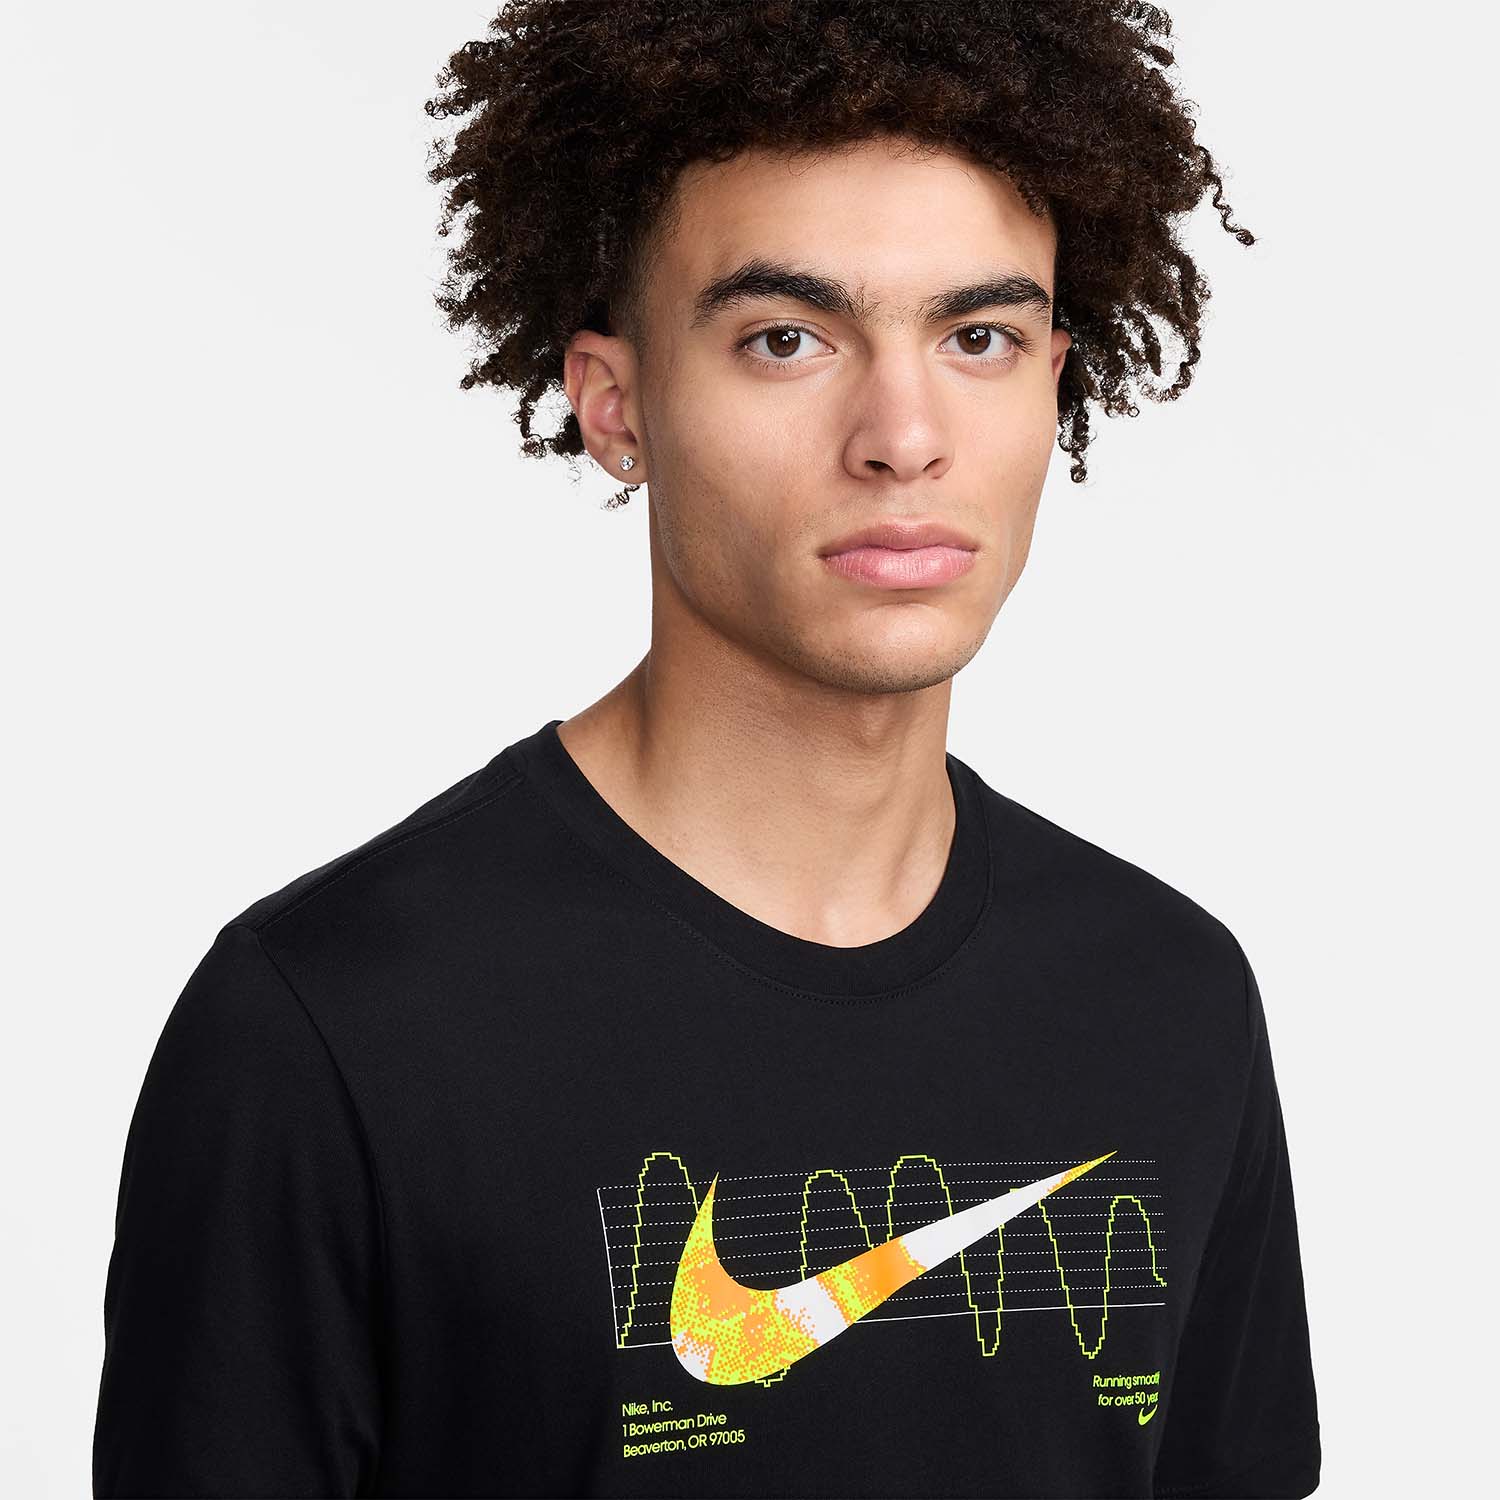 Nike Dri-FIT Graphic T-Shirt - Black